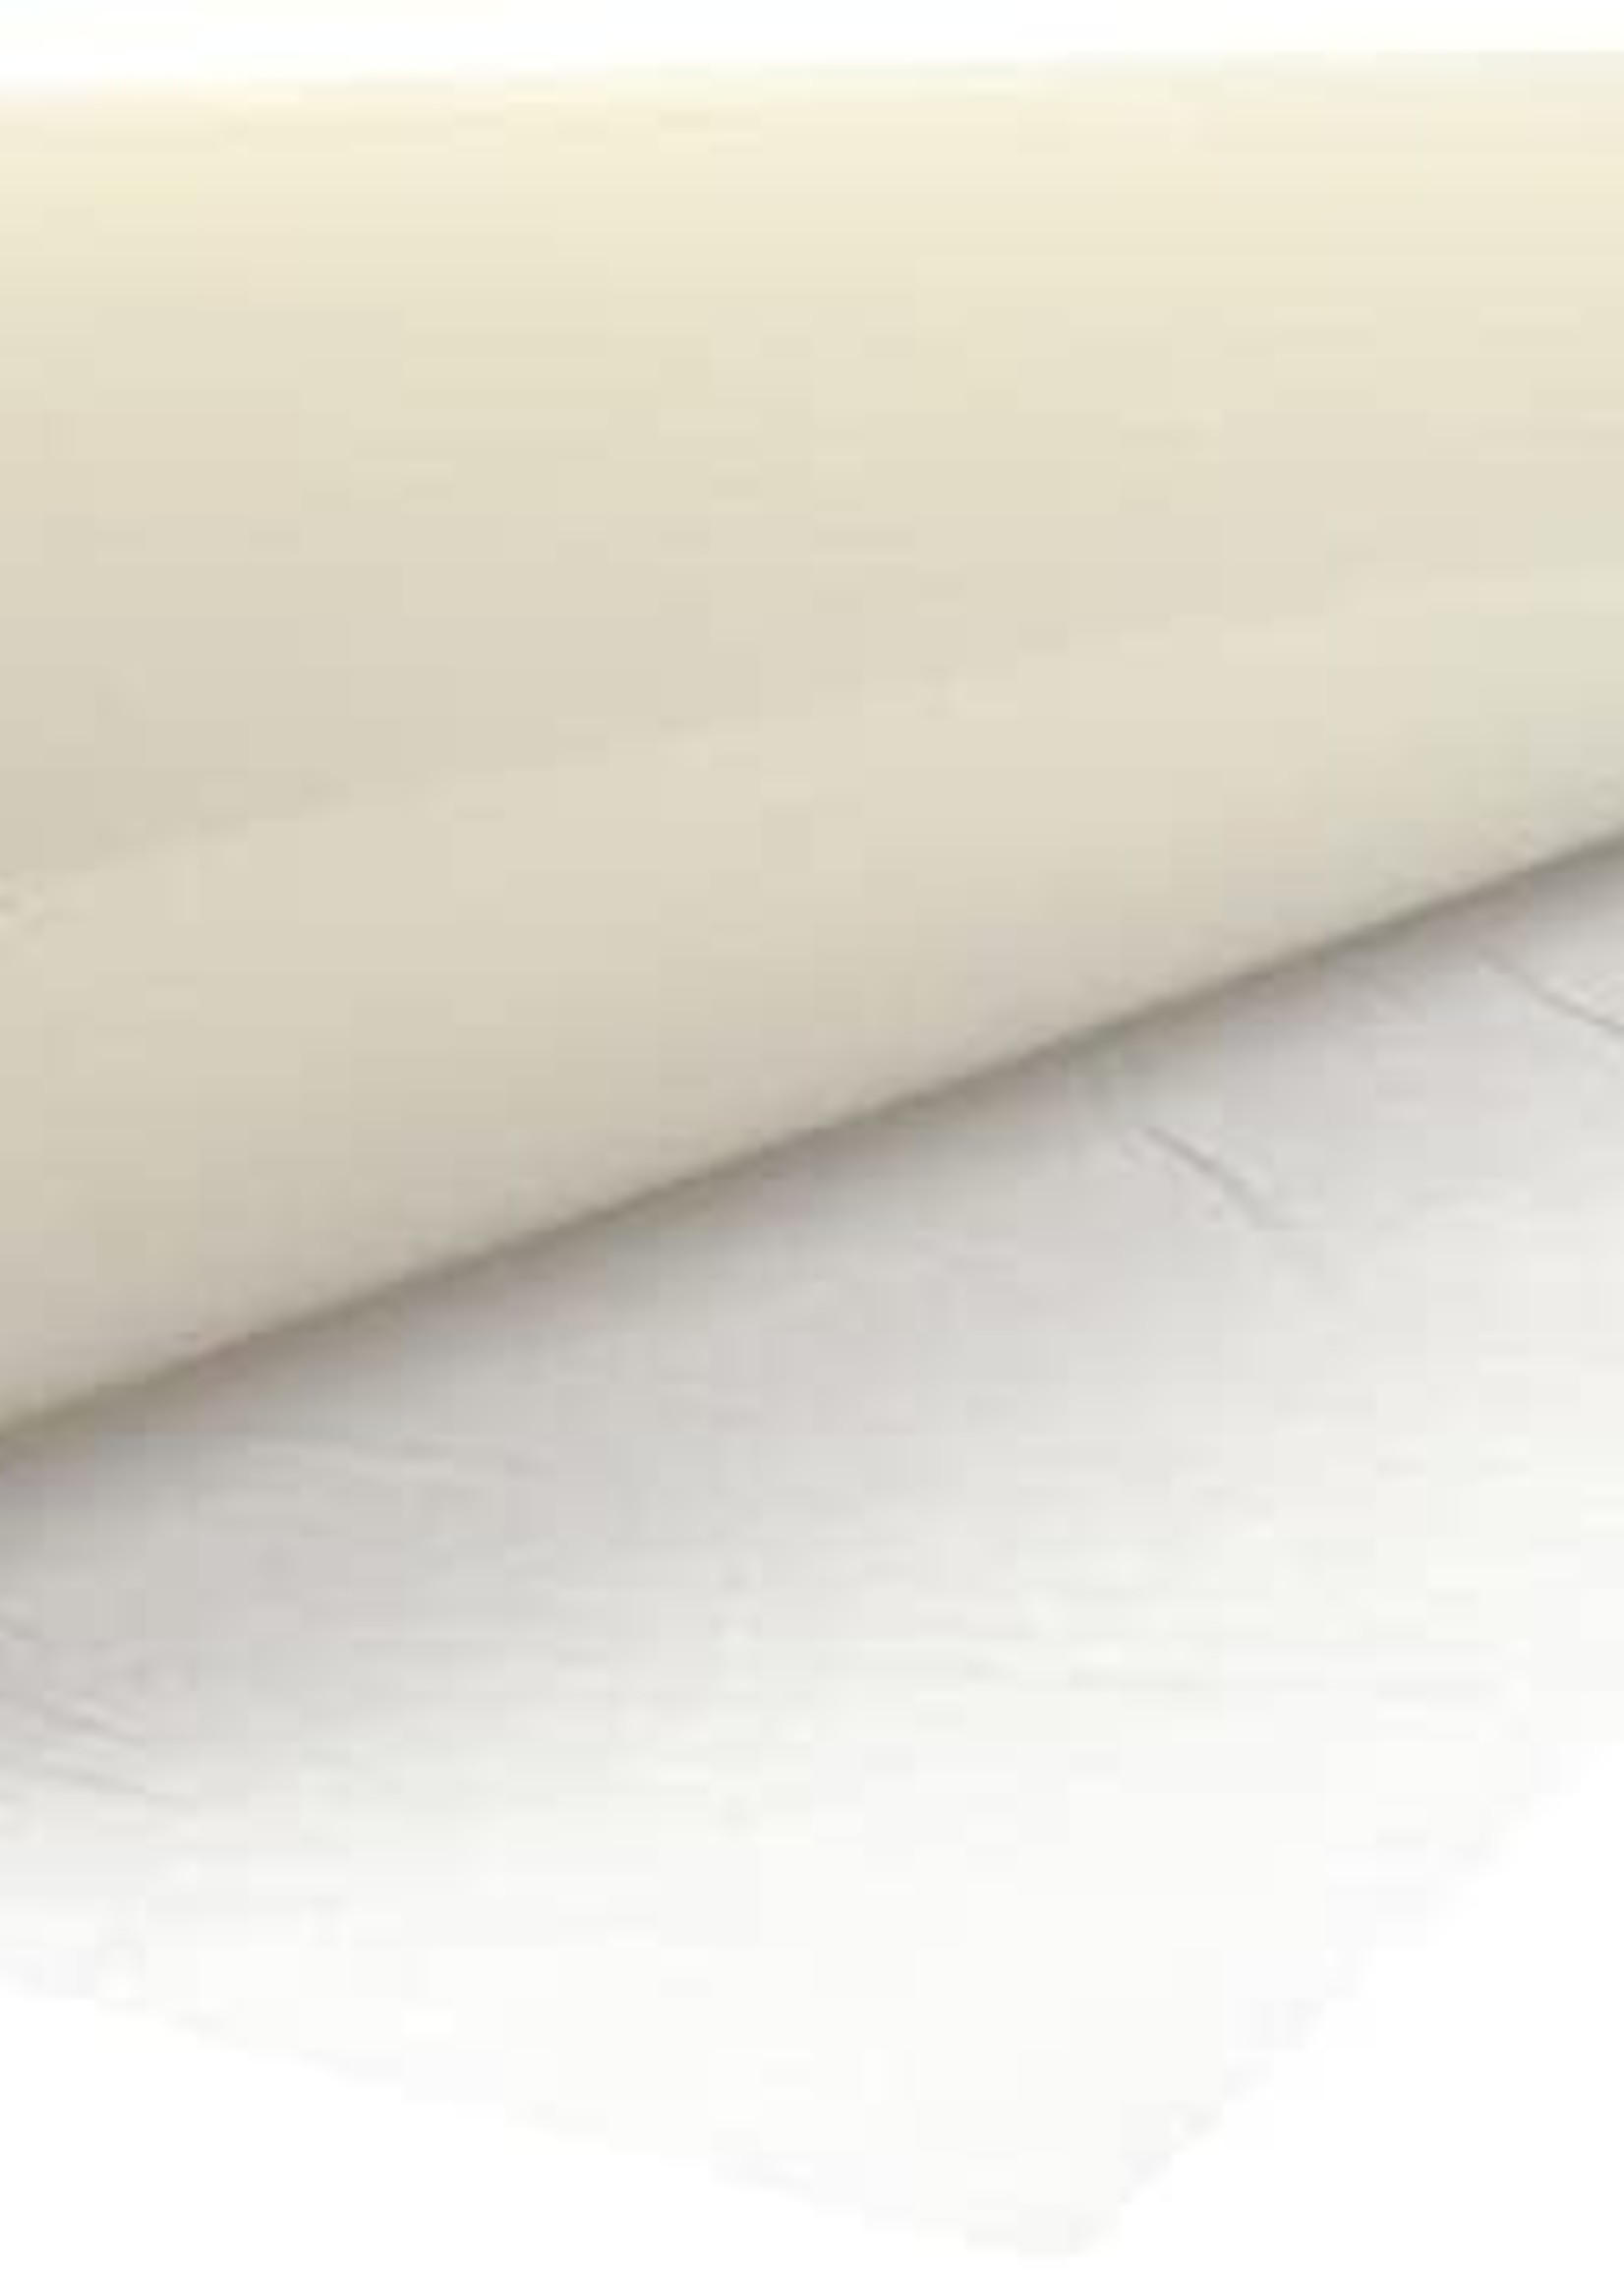 SupaDec Carpet protector self adhesive 500mm x 25m dust sheet